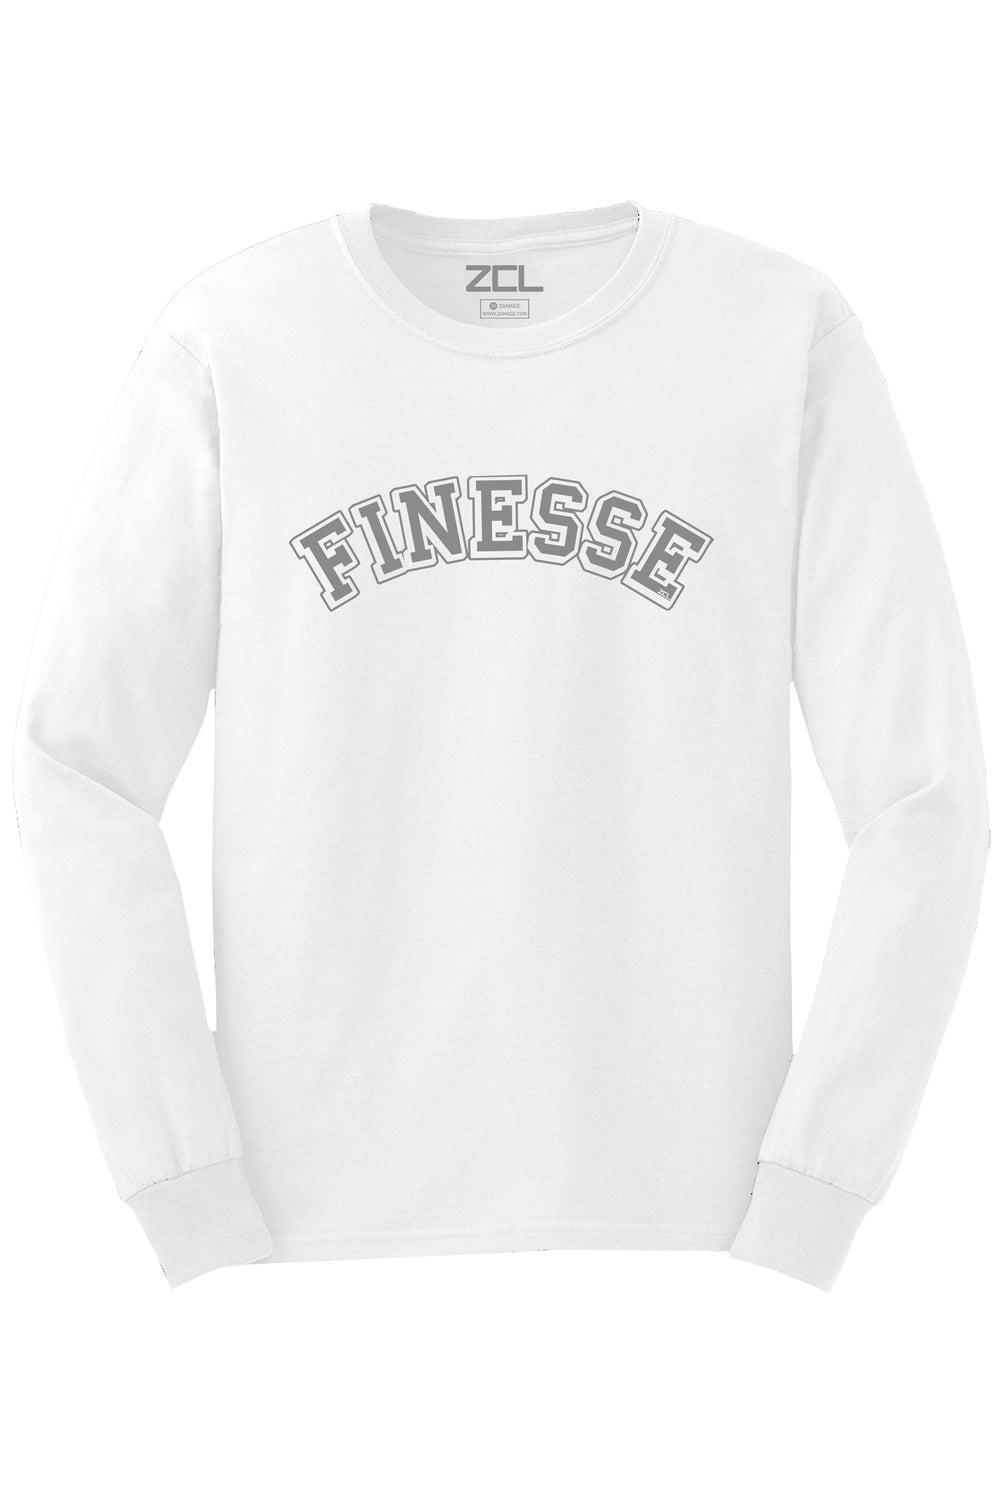 Finesse Long Sleeve Tee (Grey Logo) - Zamage